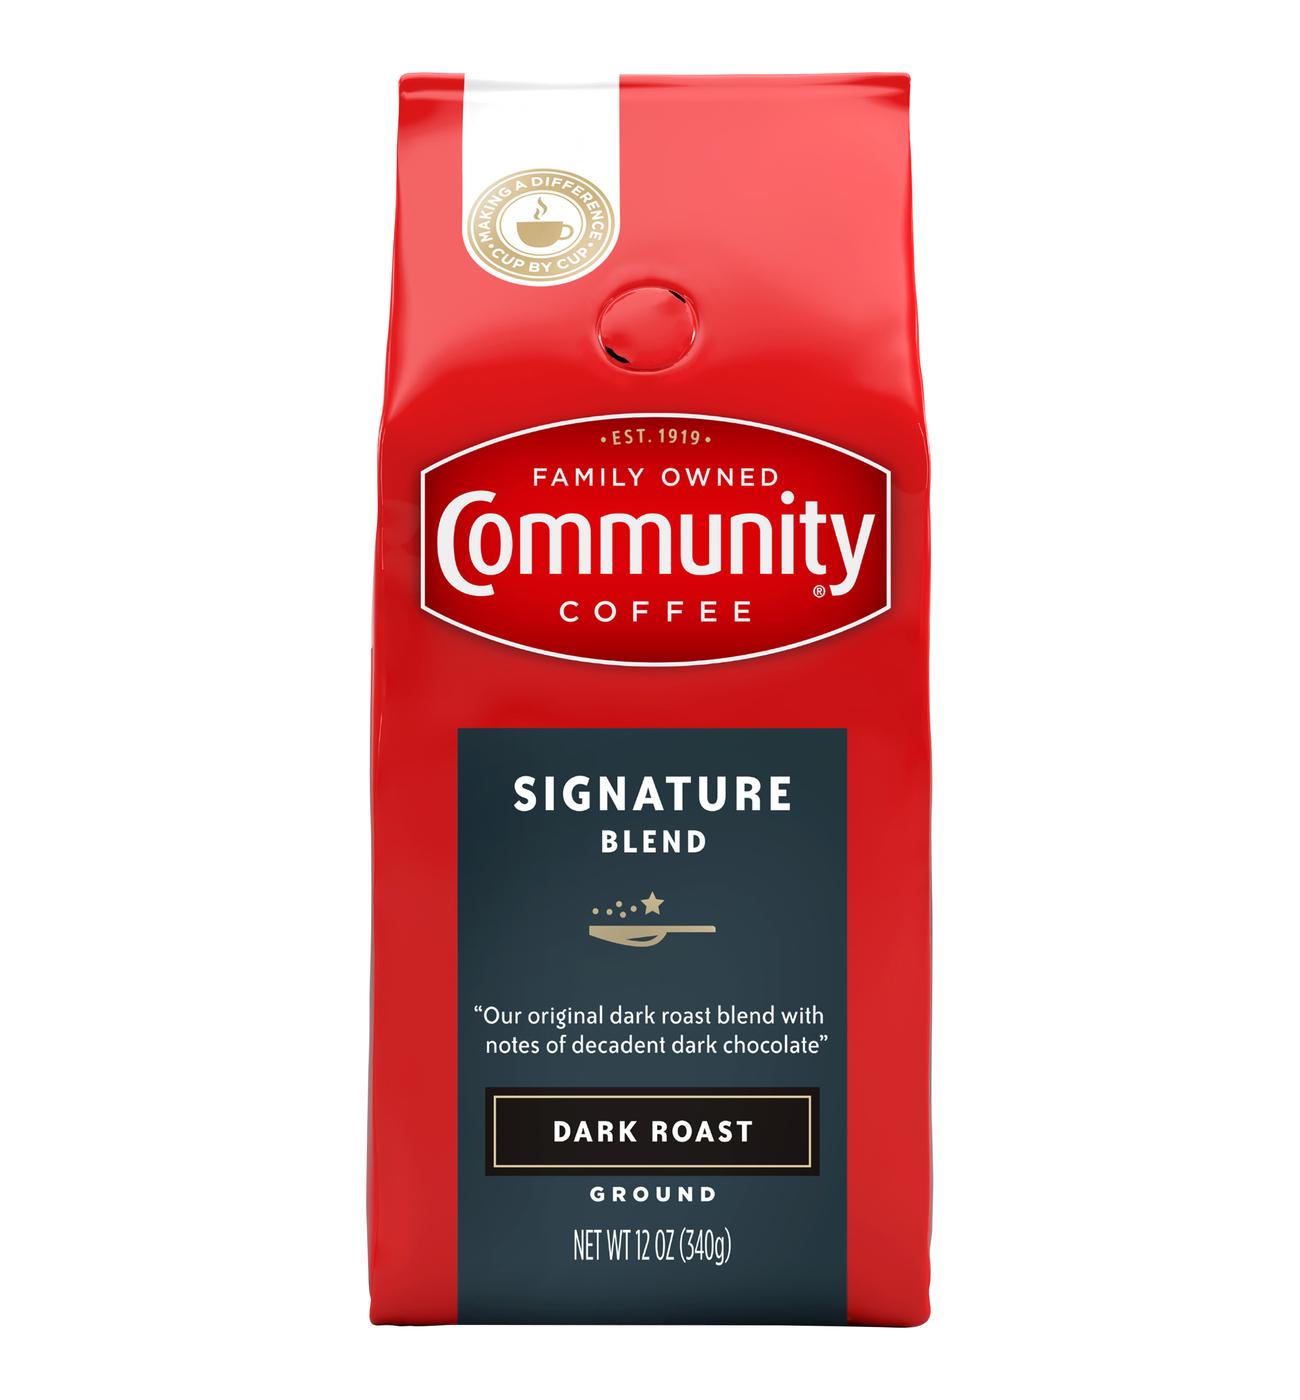 Community Coffee Signature Blend Dark Roast Ground Coffee; image 1 of 2